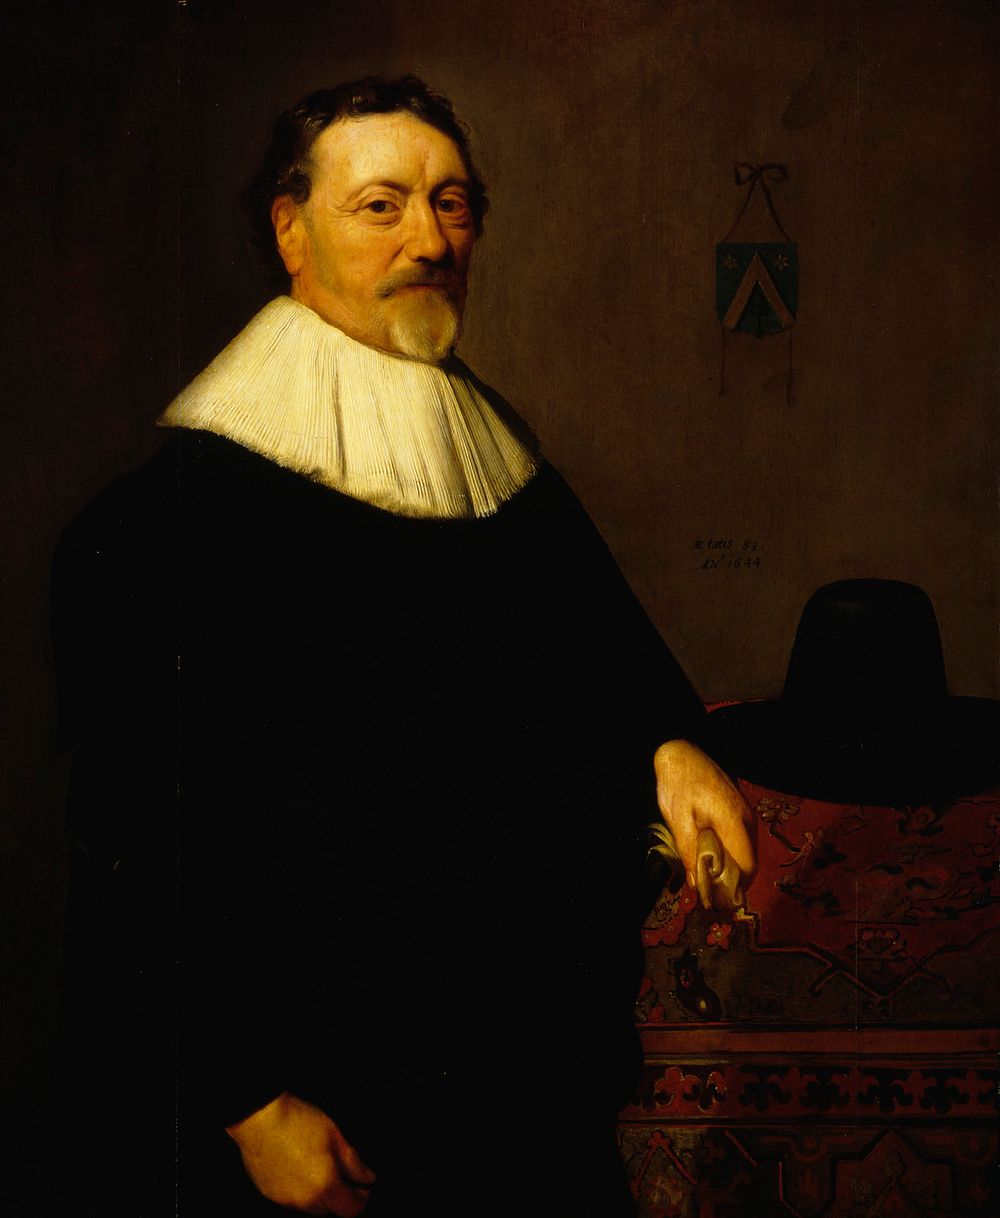 Jan de mey, 1644